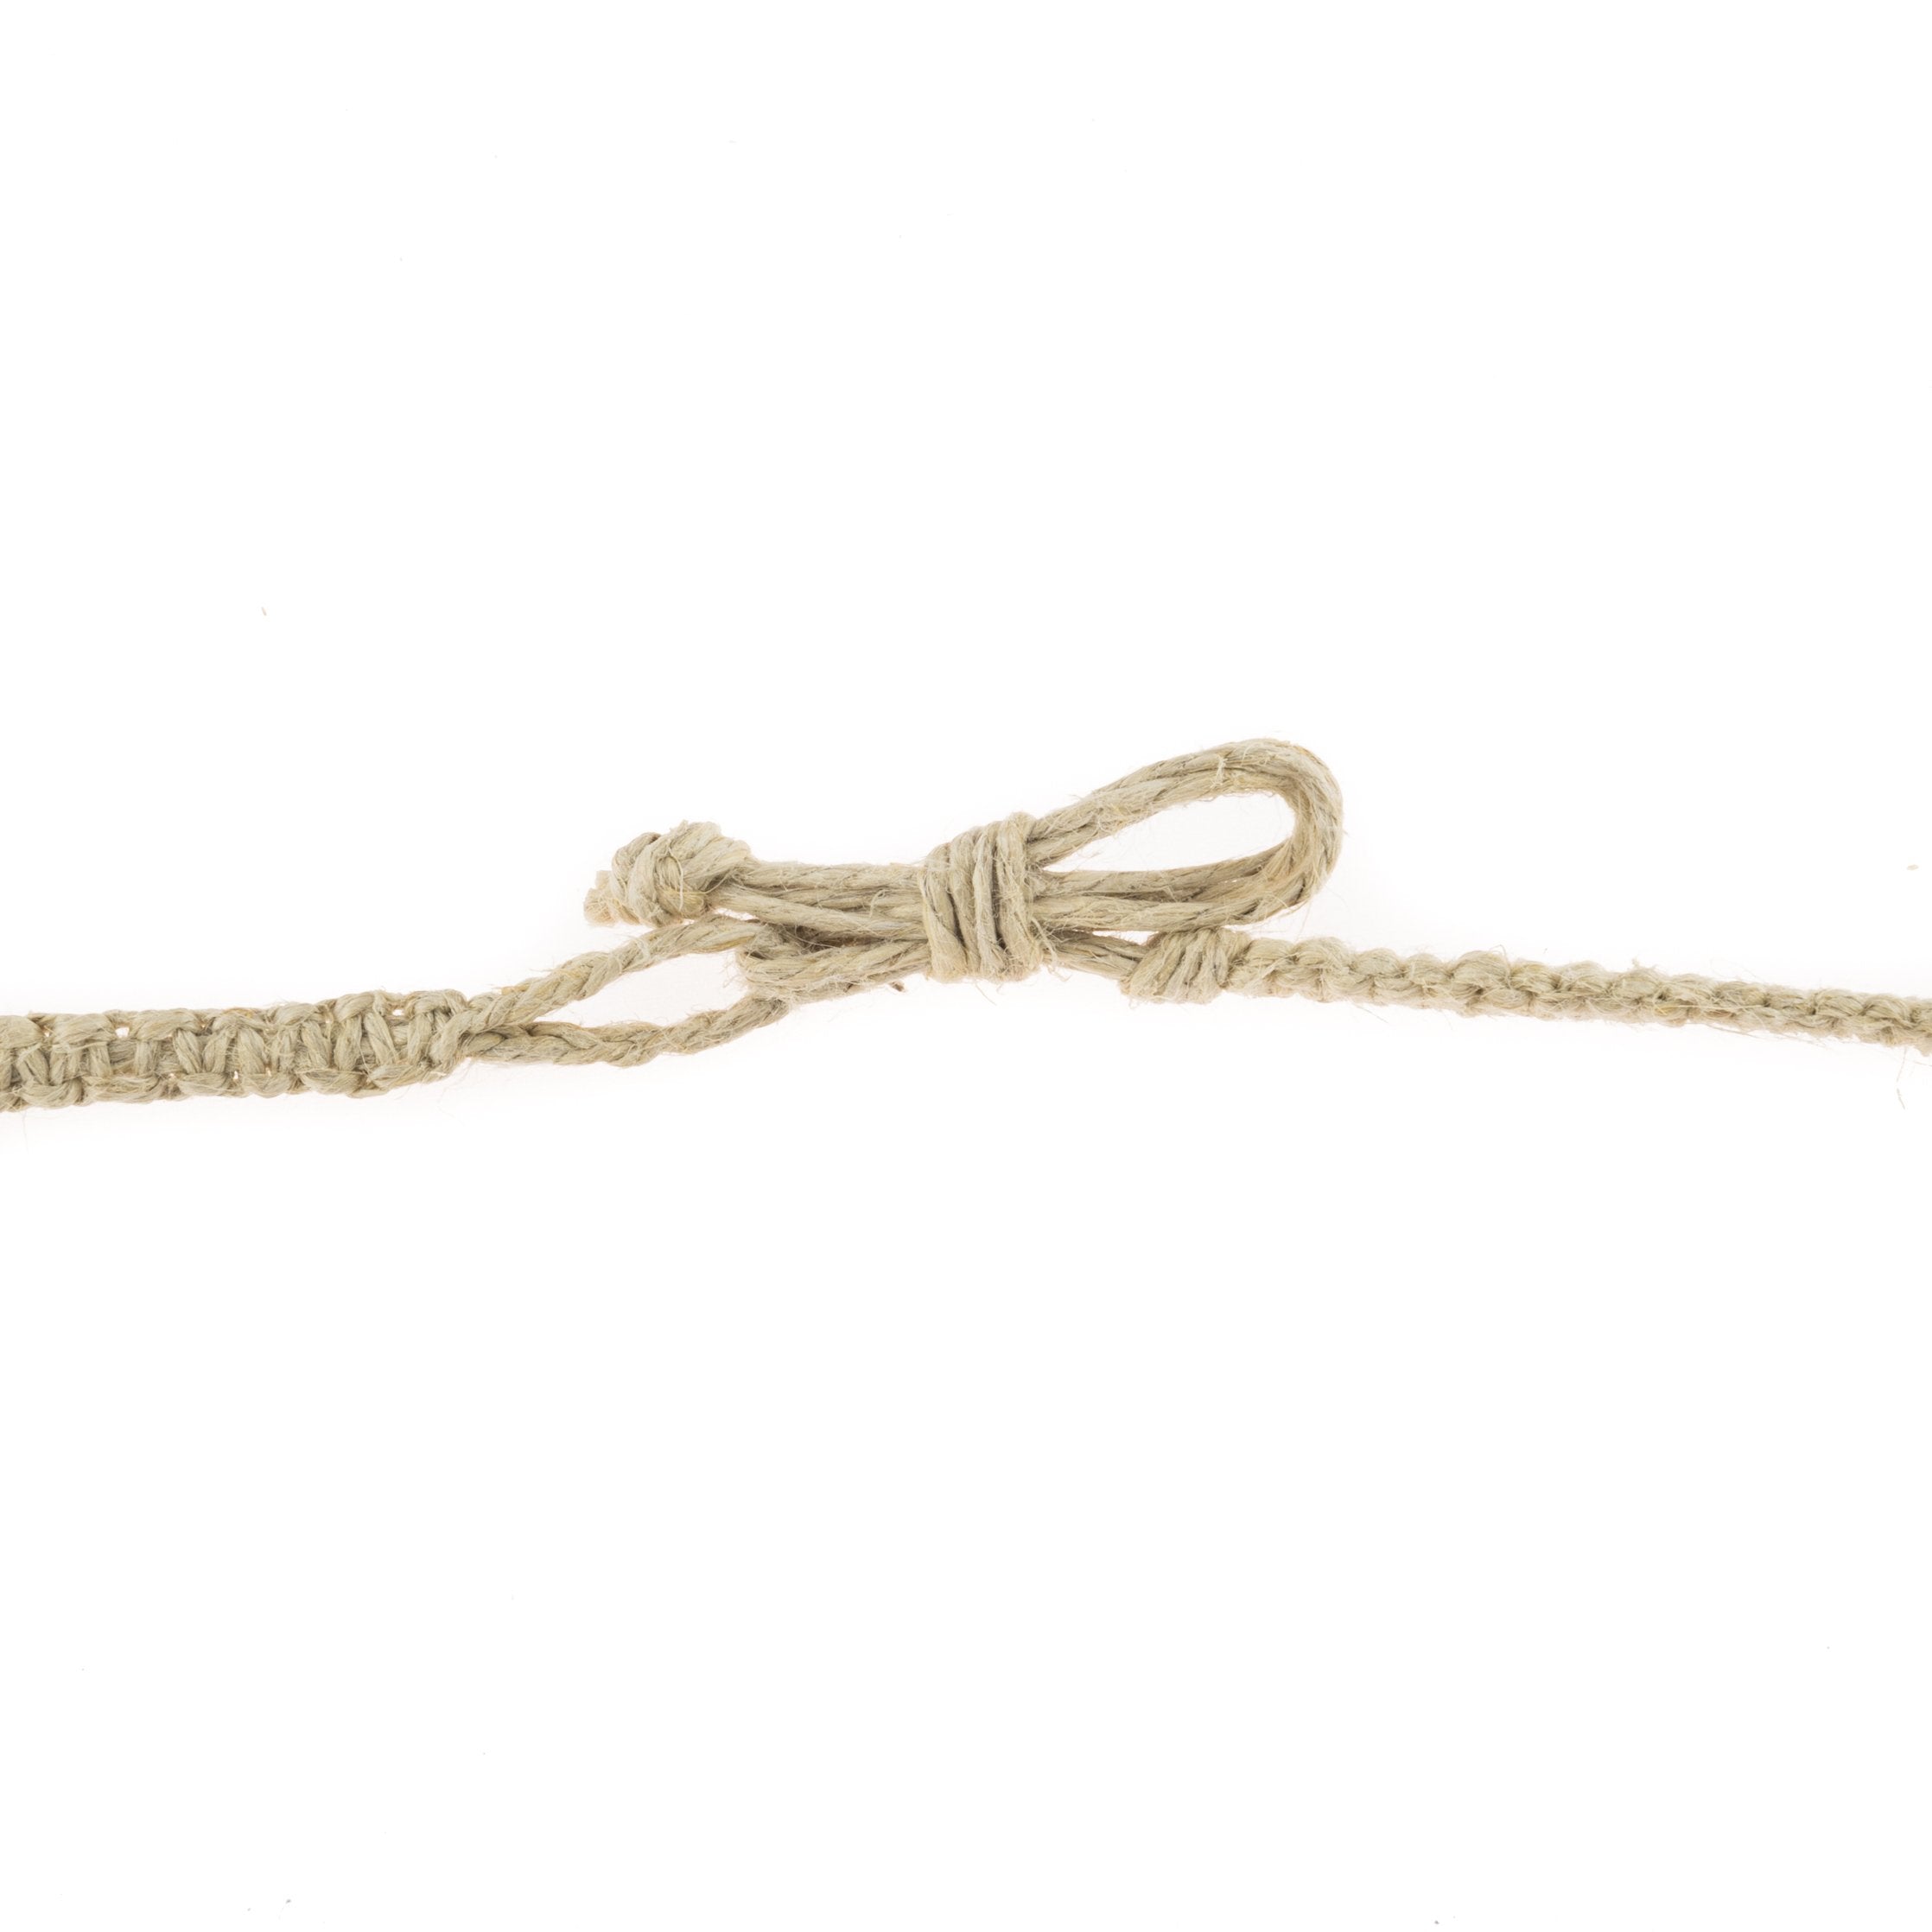 1"+ Shark Tooth Pendant on Hemp and Puka Shell Beads Necklace